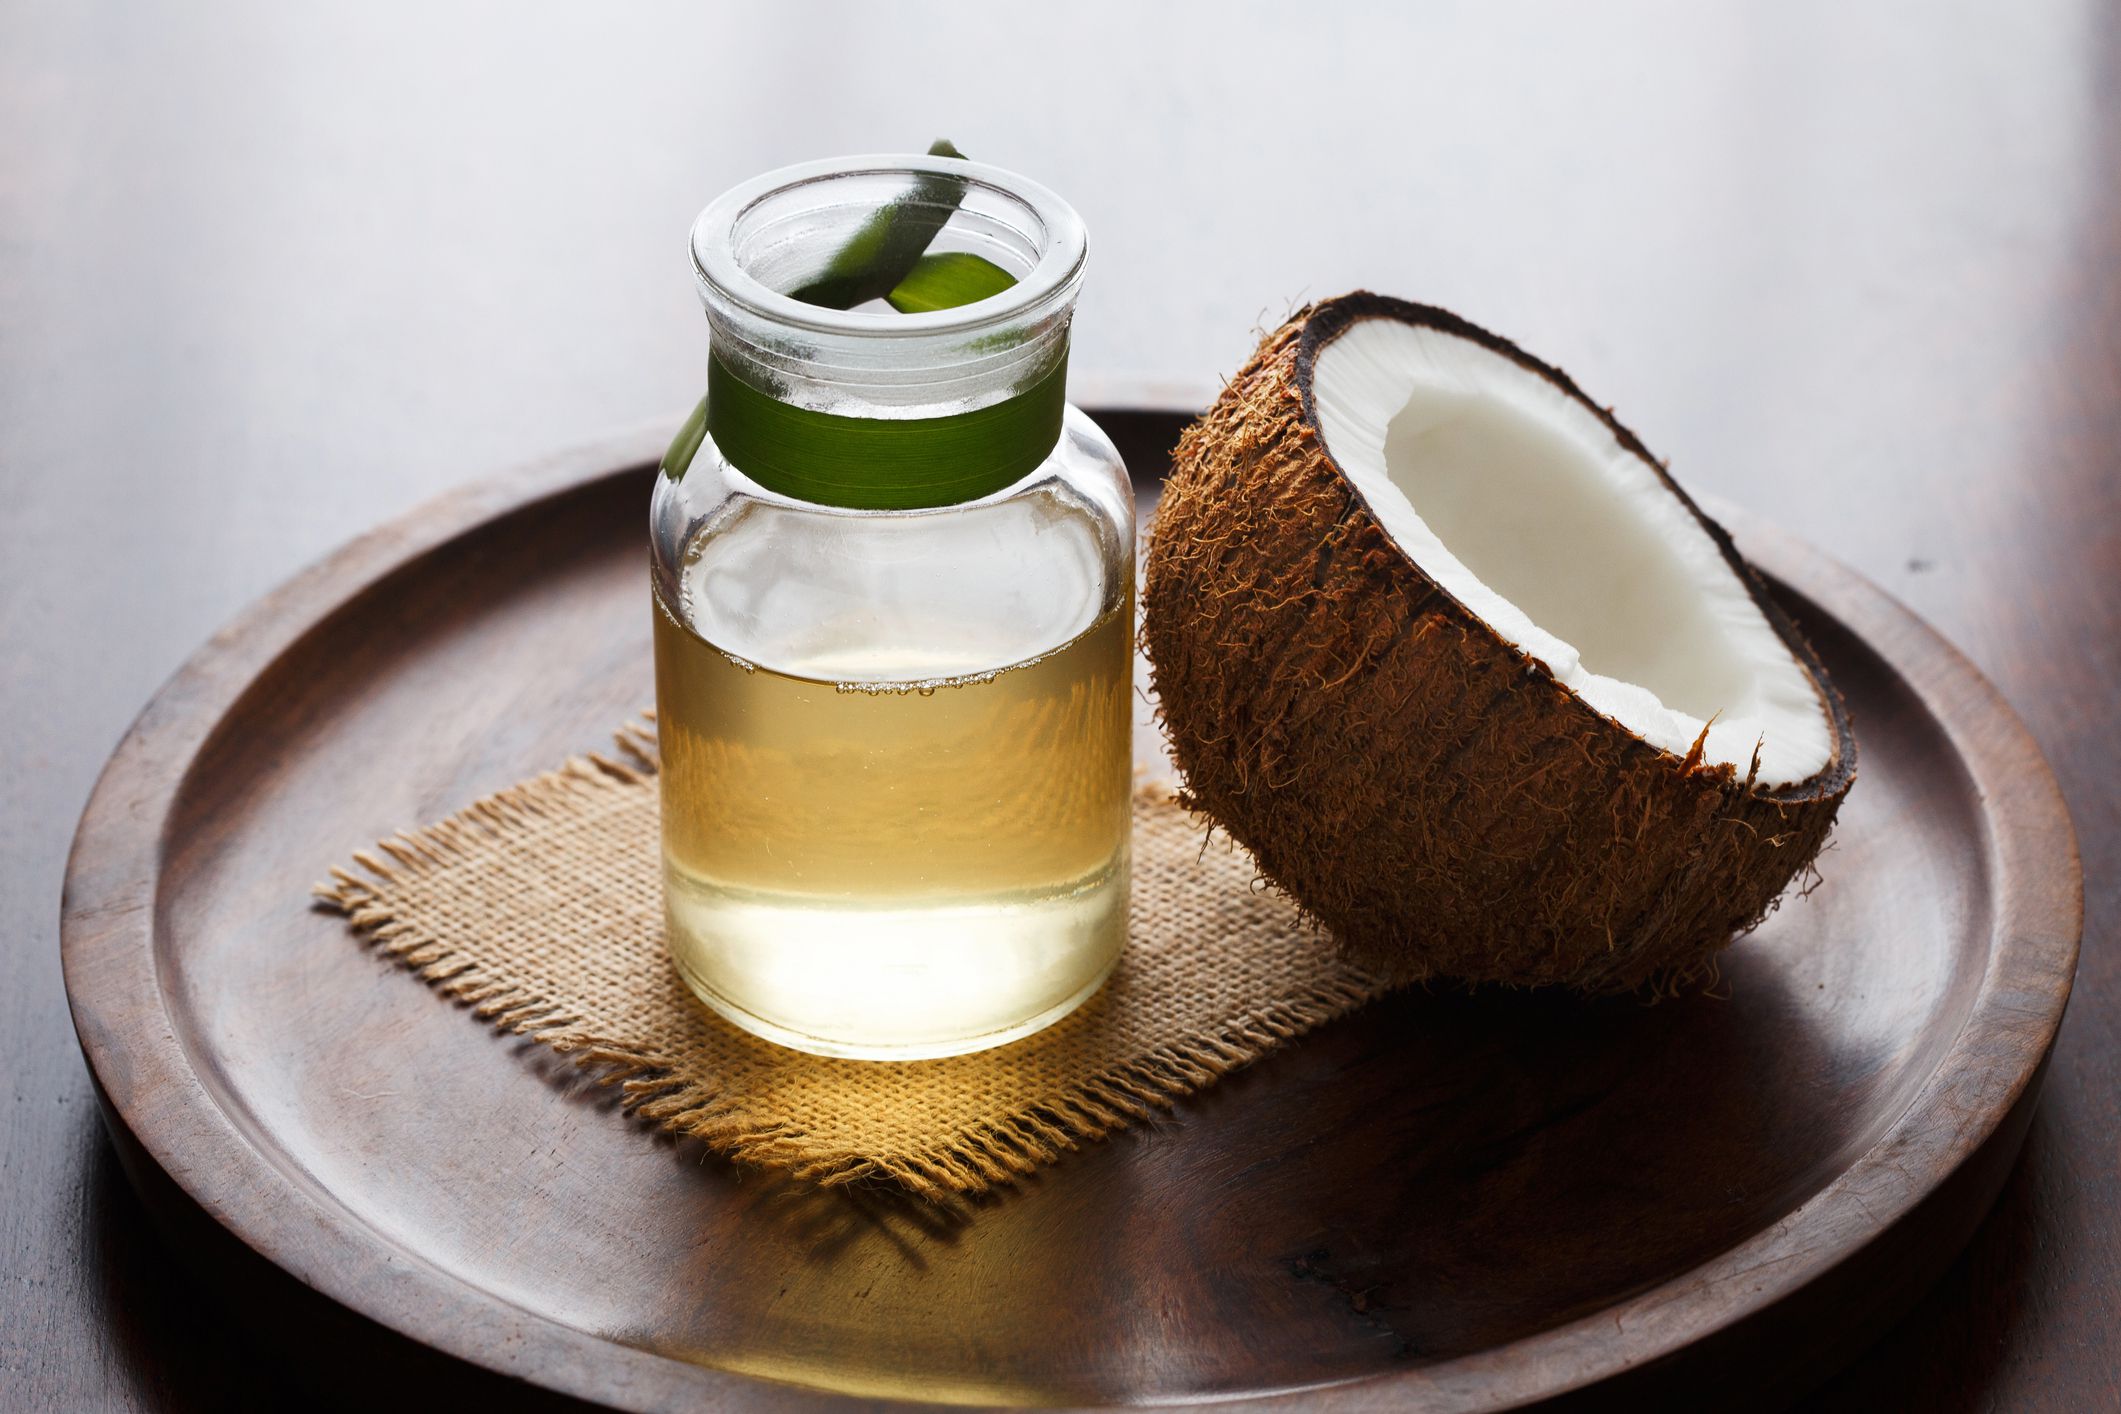 Best coconut oil for bathwater in 2021